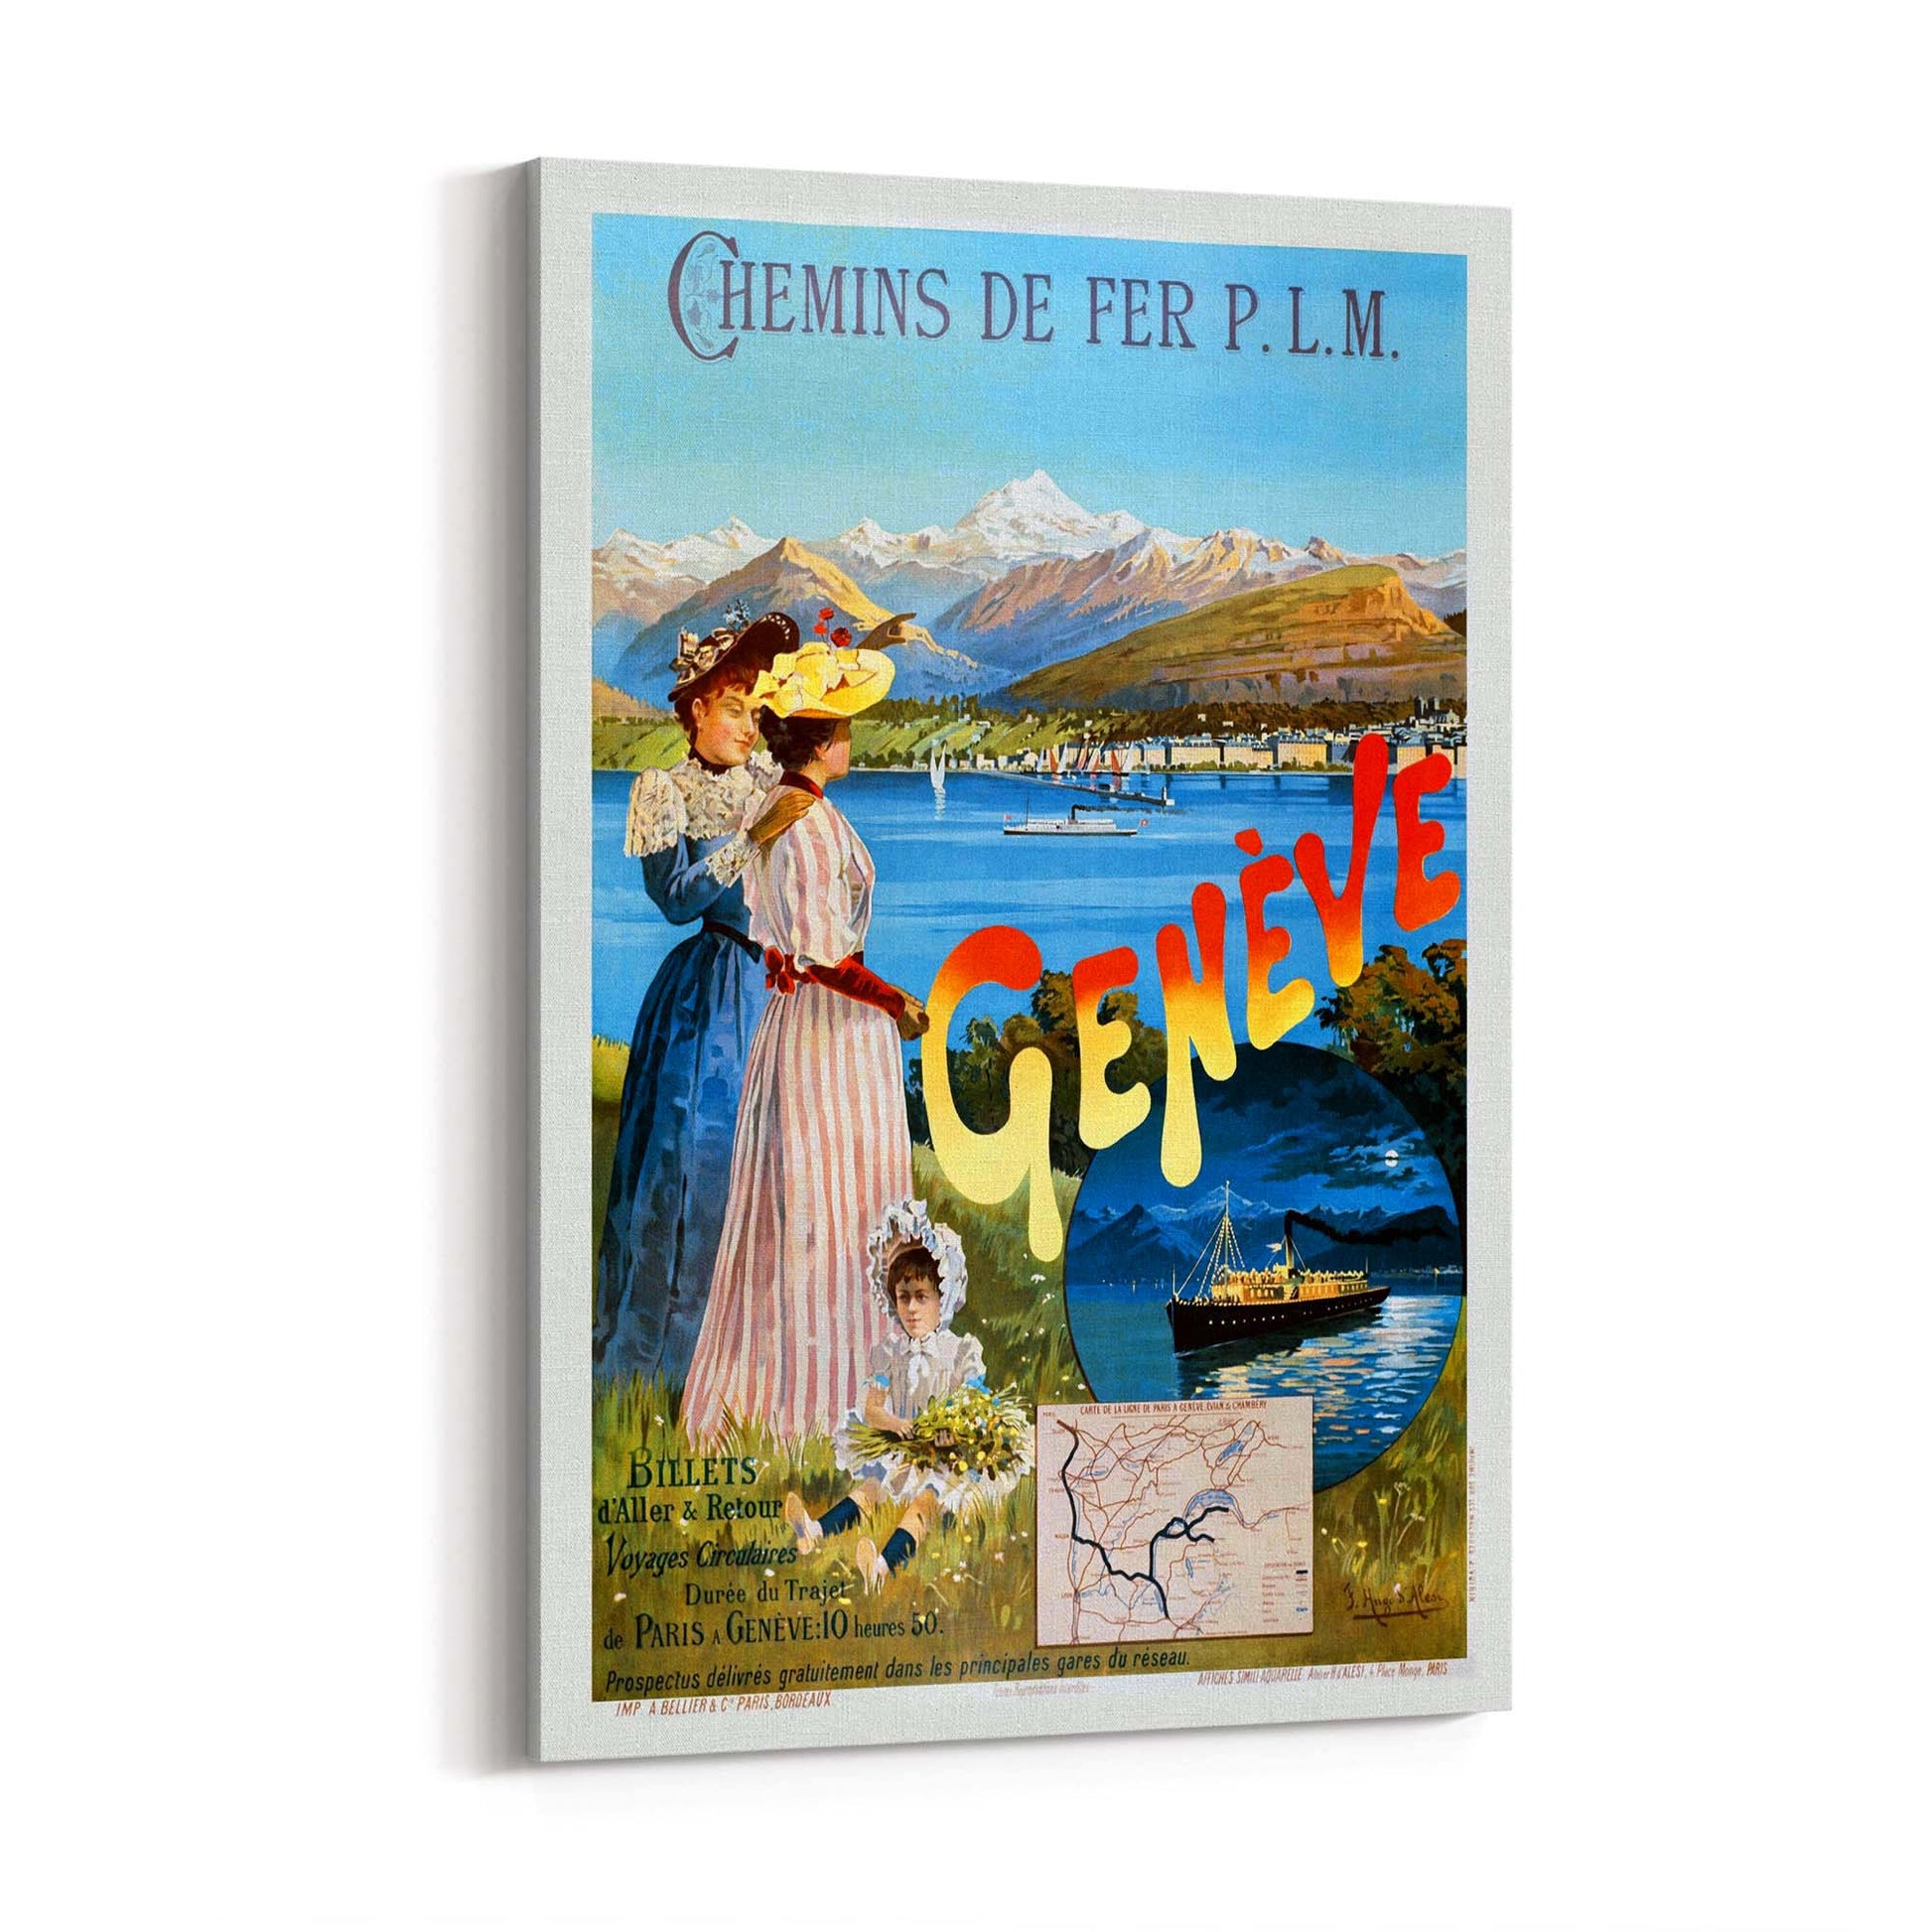 Geneve, Switzerland Vintage Travel Advert Wall Art - The Affordable Art Company